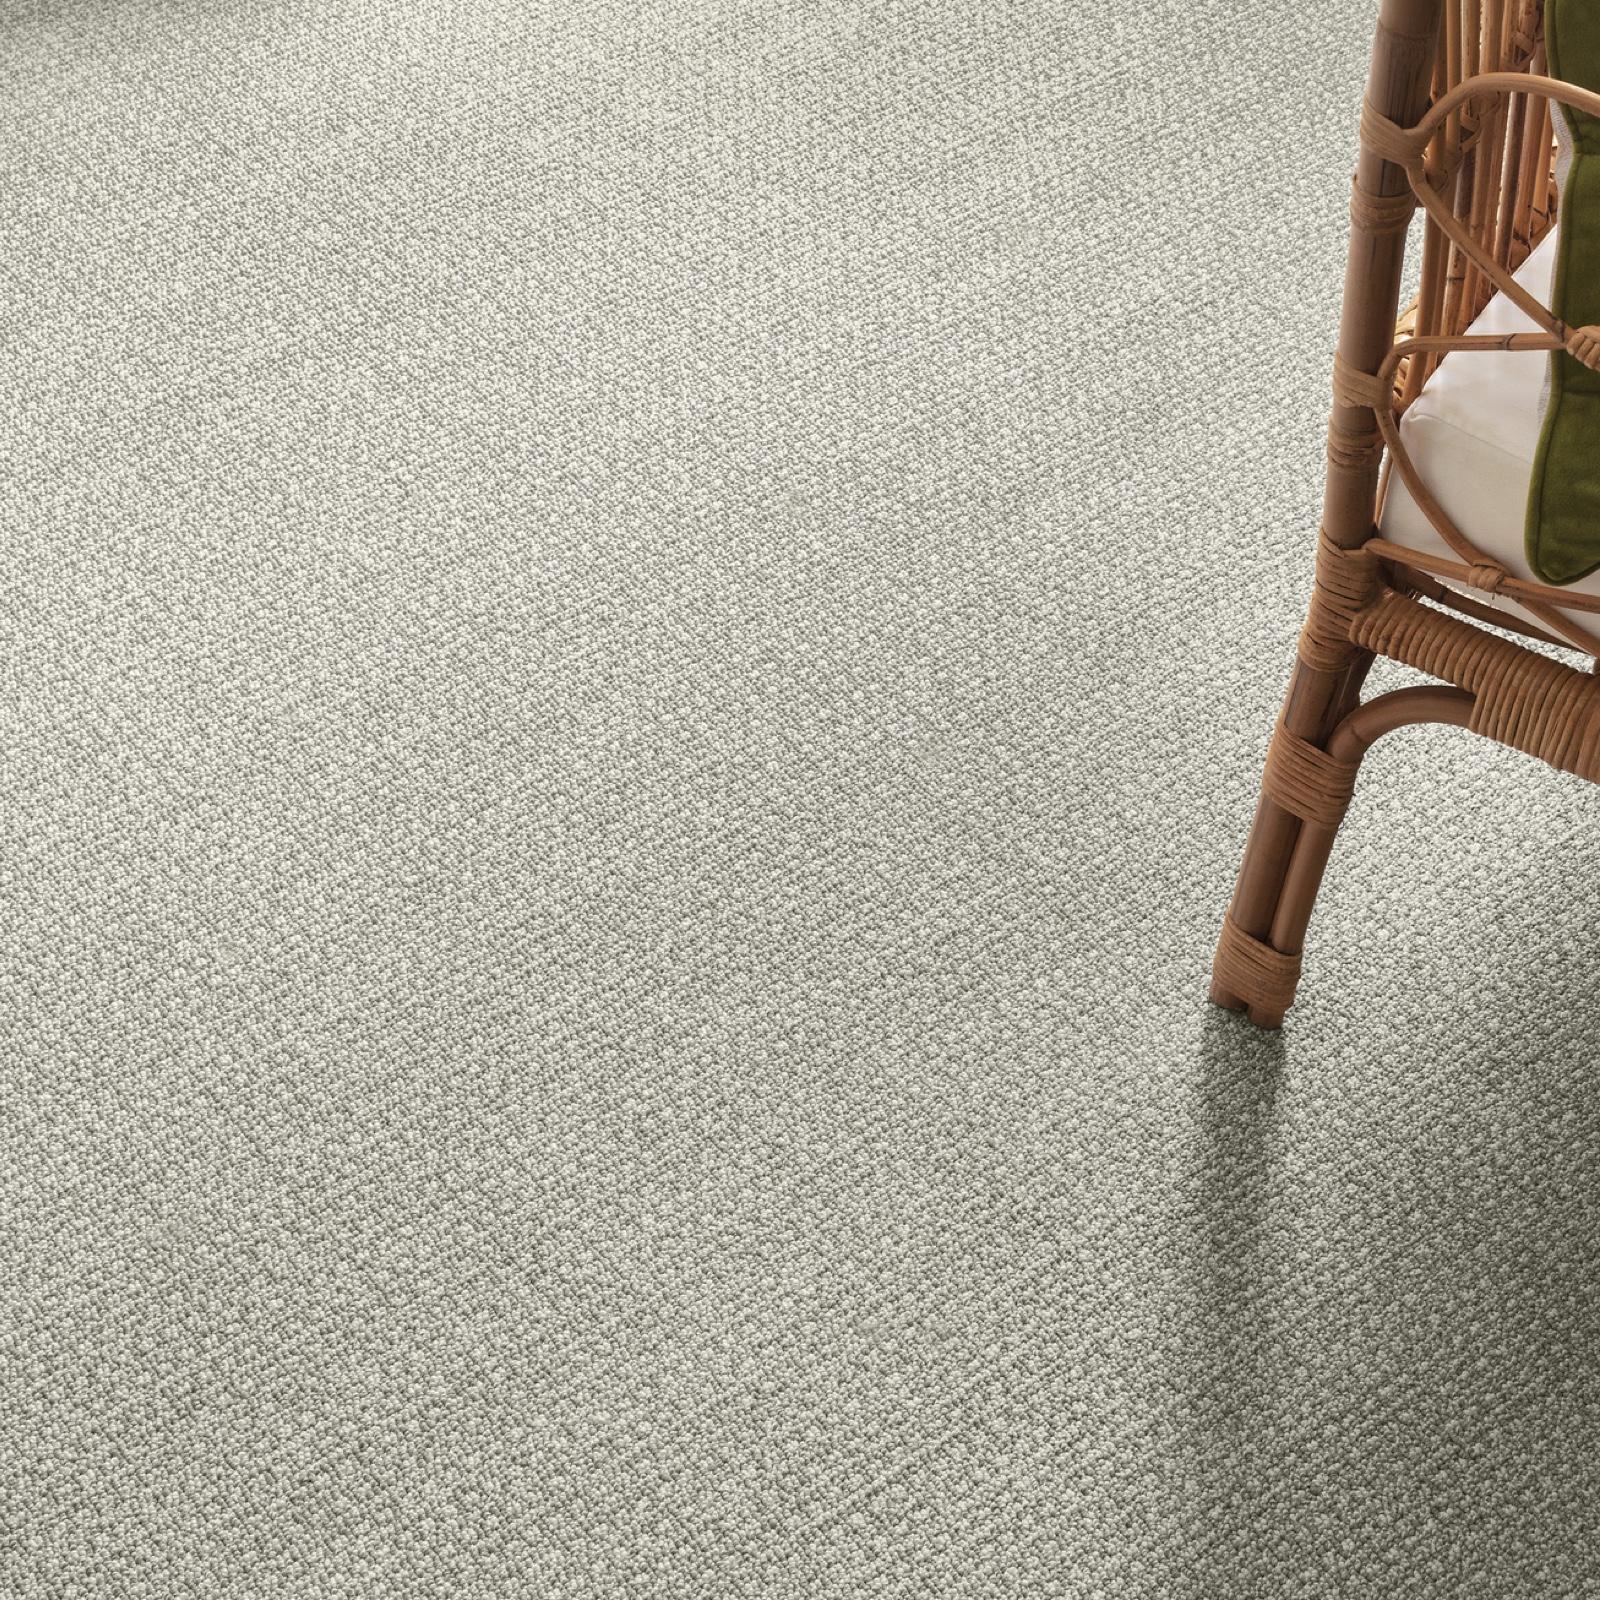 Carpet pattern | Flooring Direct